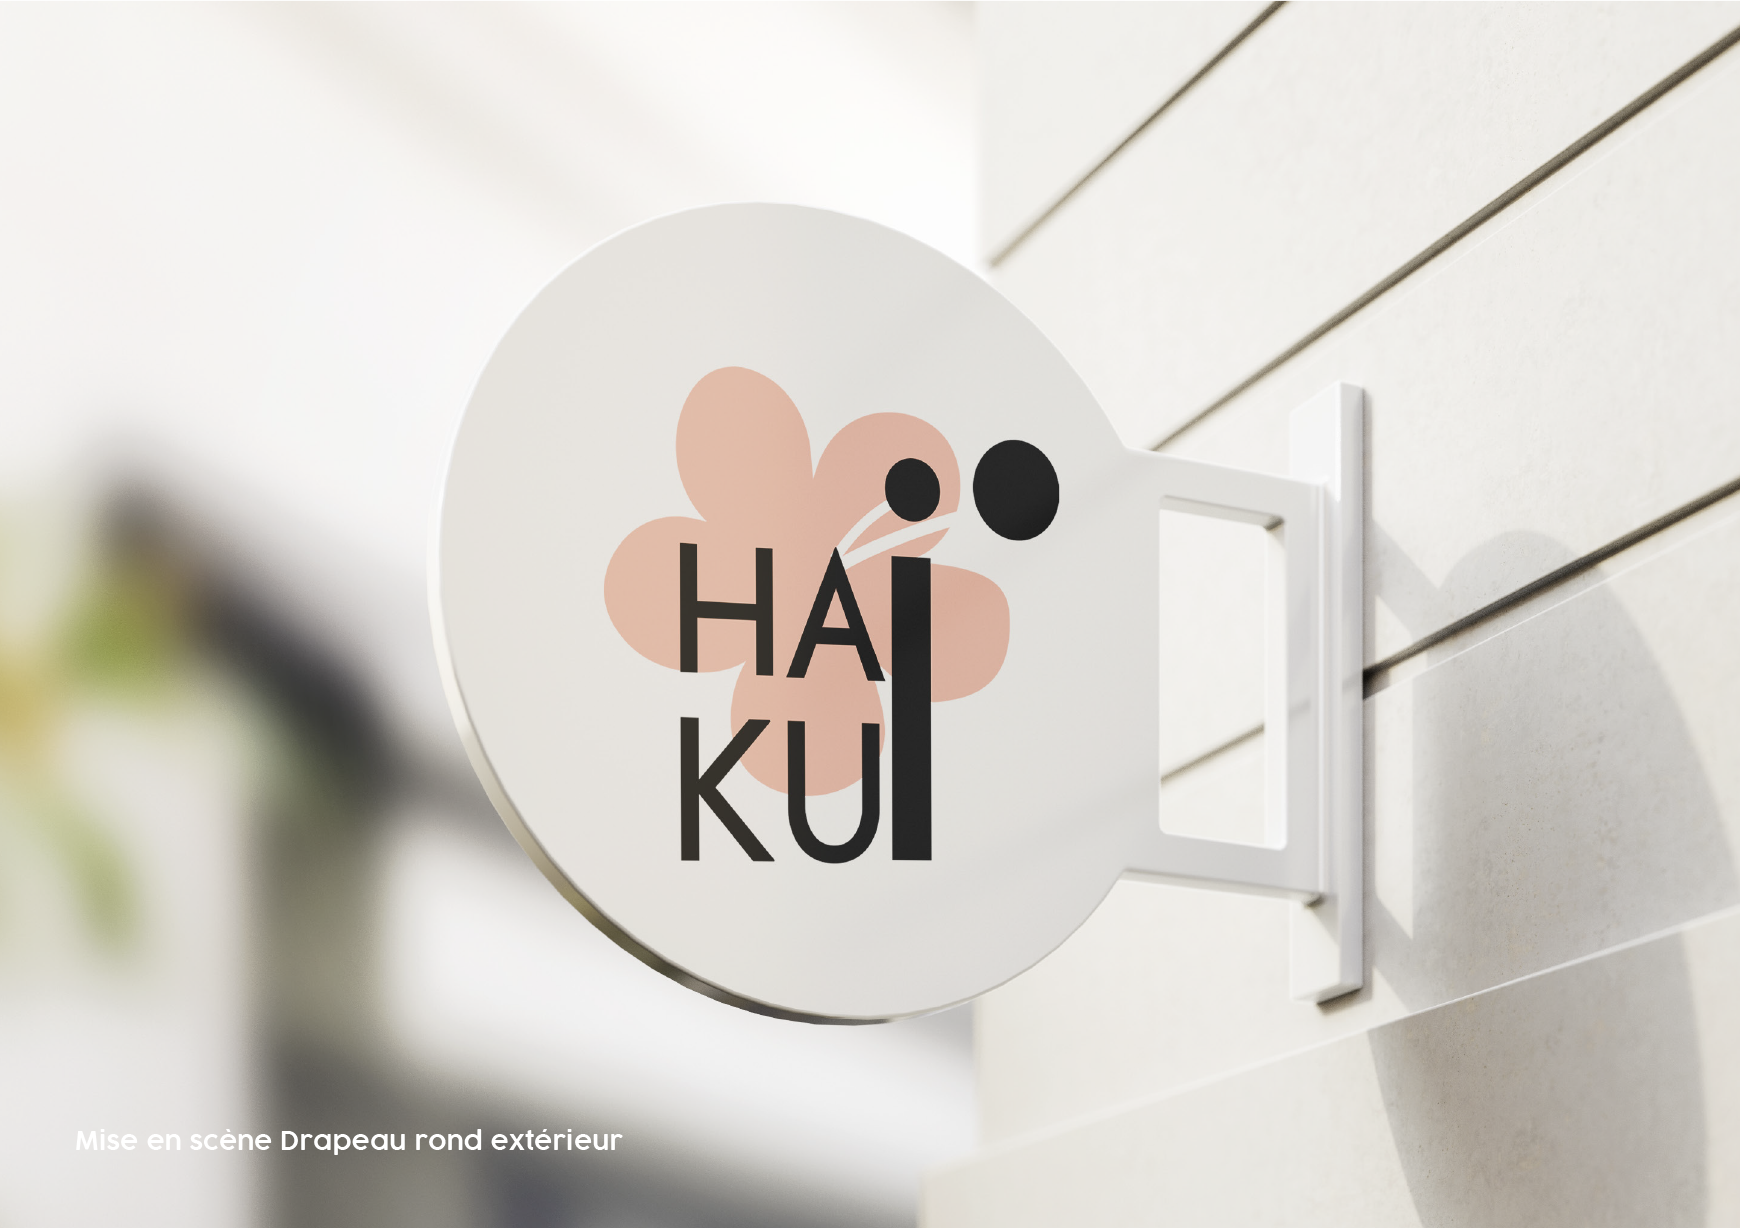 les paupiettes sarl pauline rudolf graphisme architecture interieure logo haiku restaurant de sushis